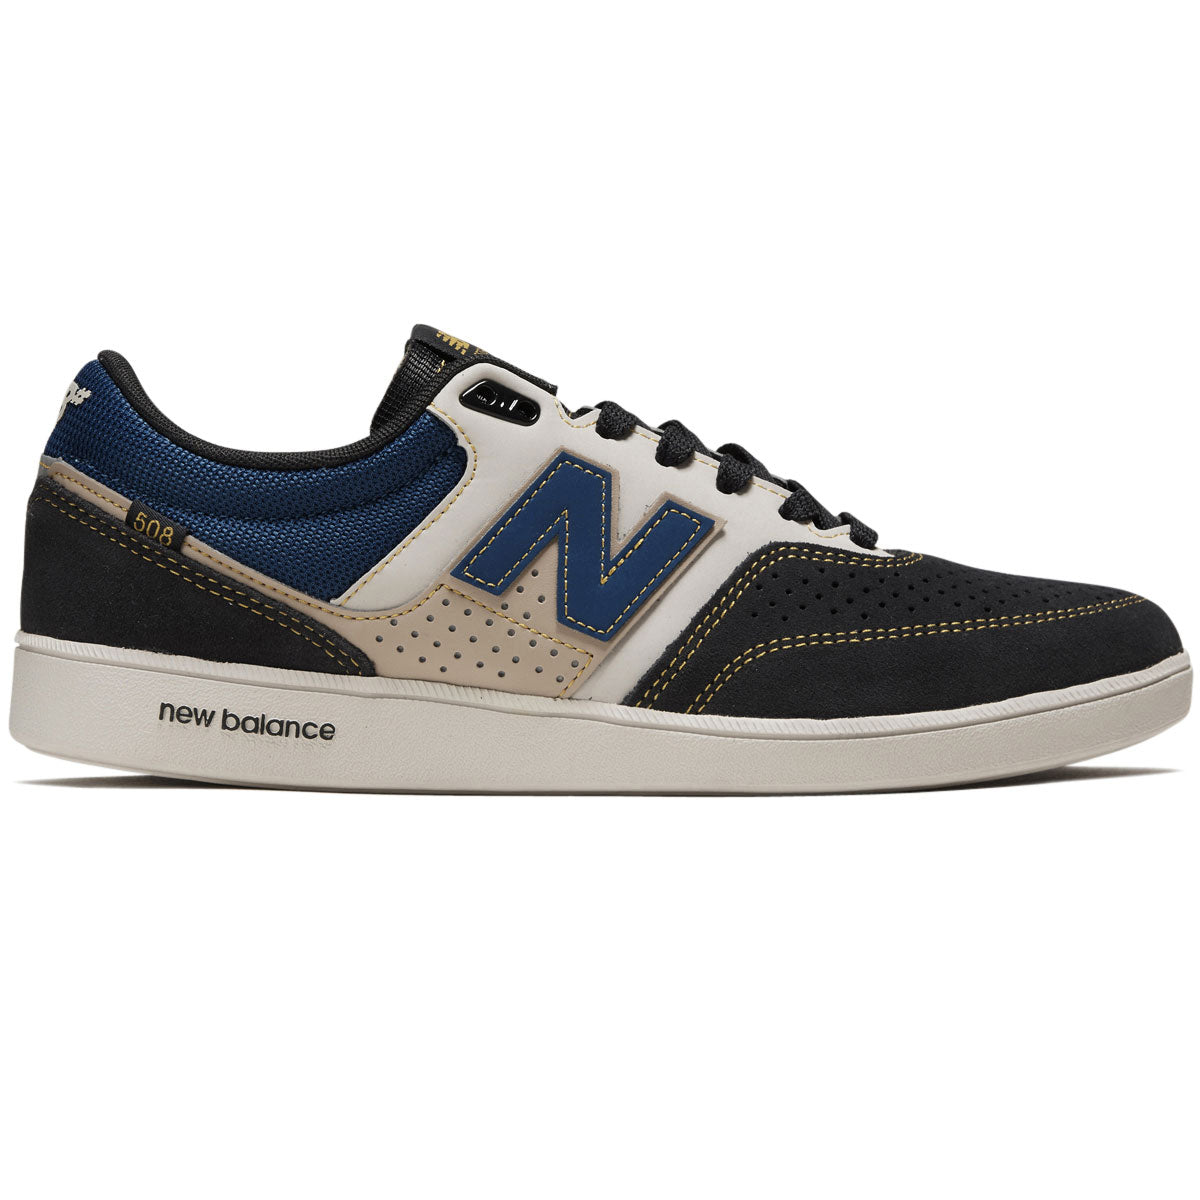 New Balance 508 Westgate Shoes - Navy/Tan image 1